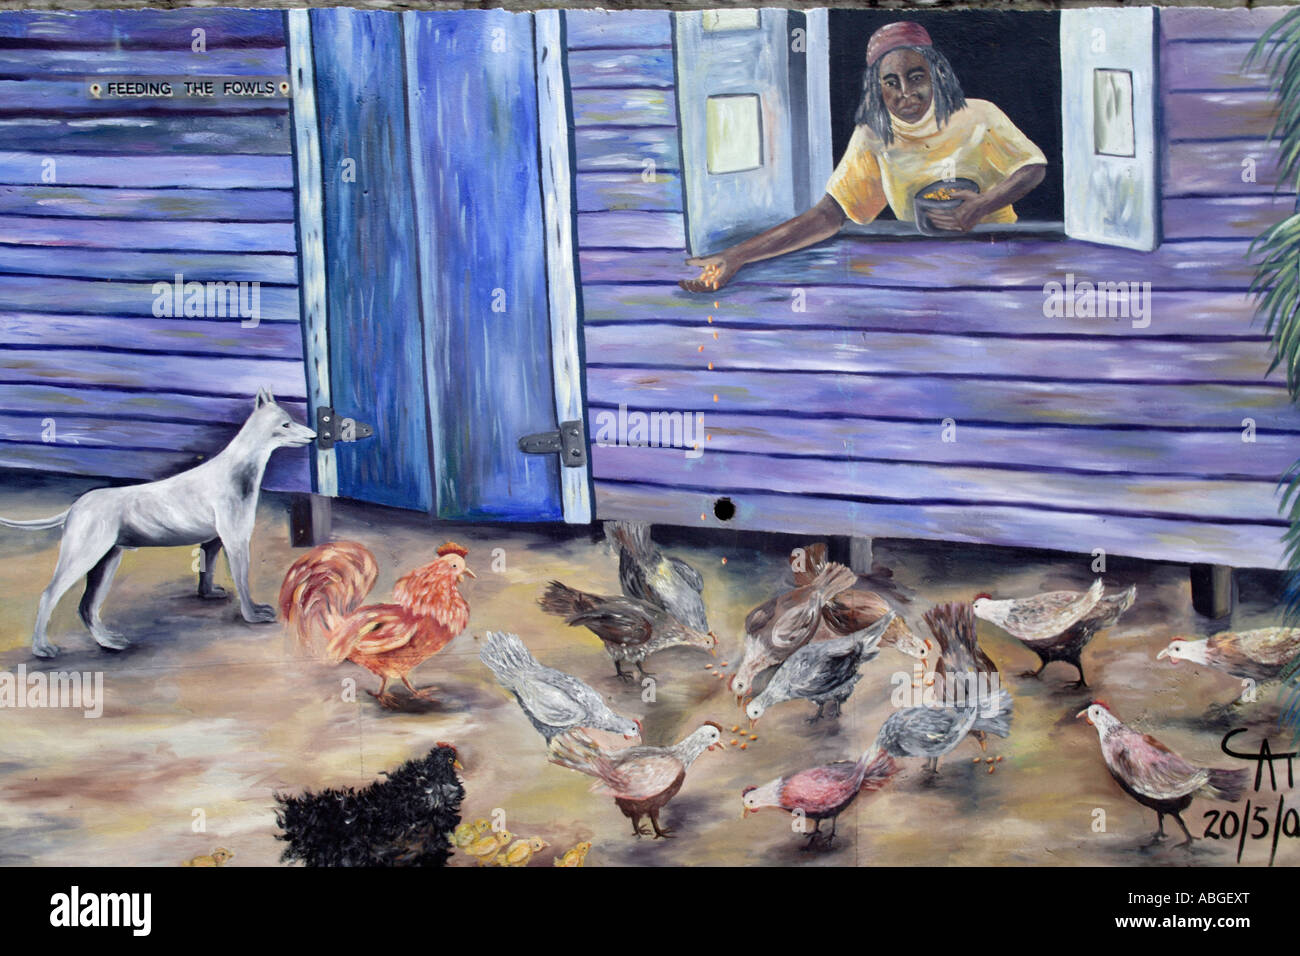 Feeding the fowls, Wall Mural, BVI Stock Photo